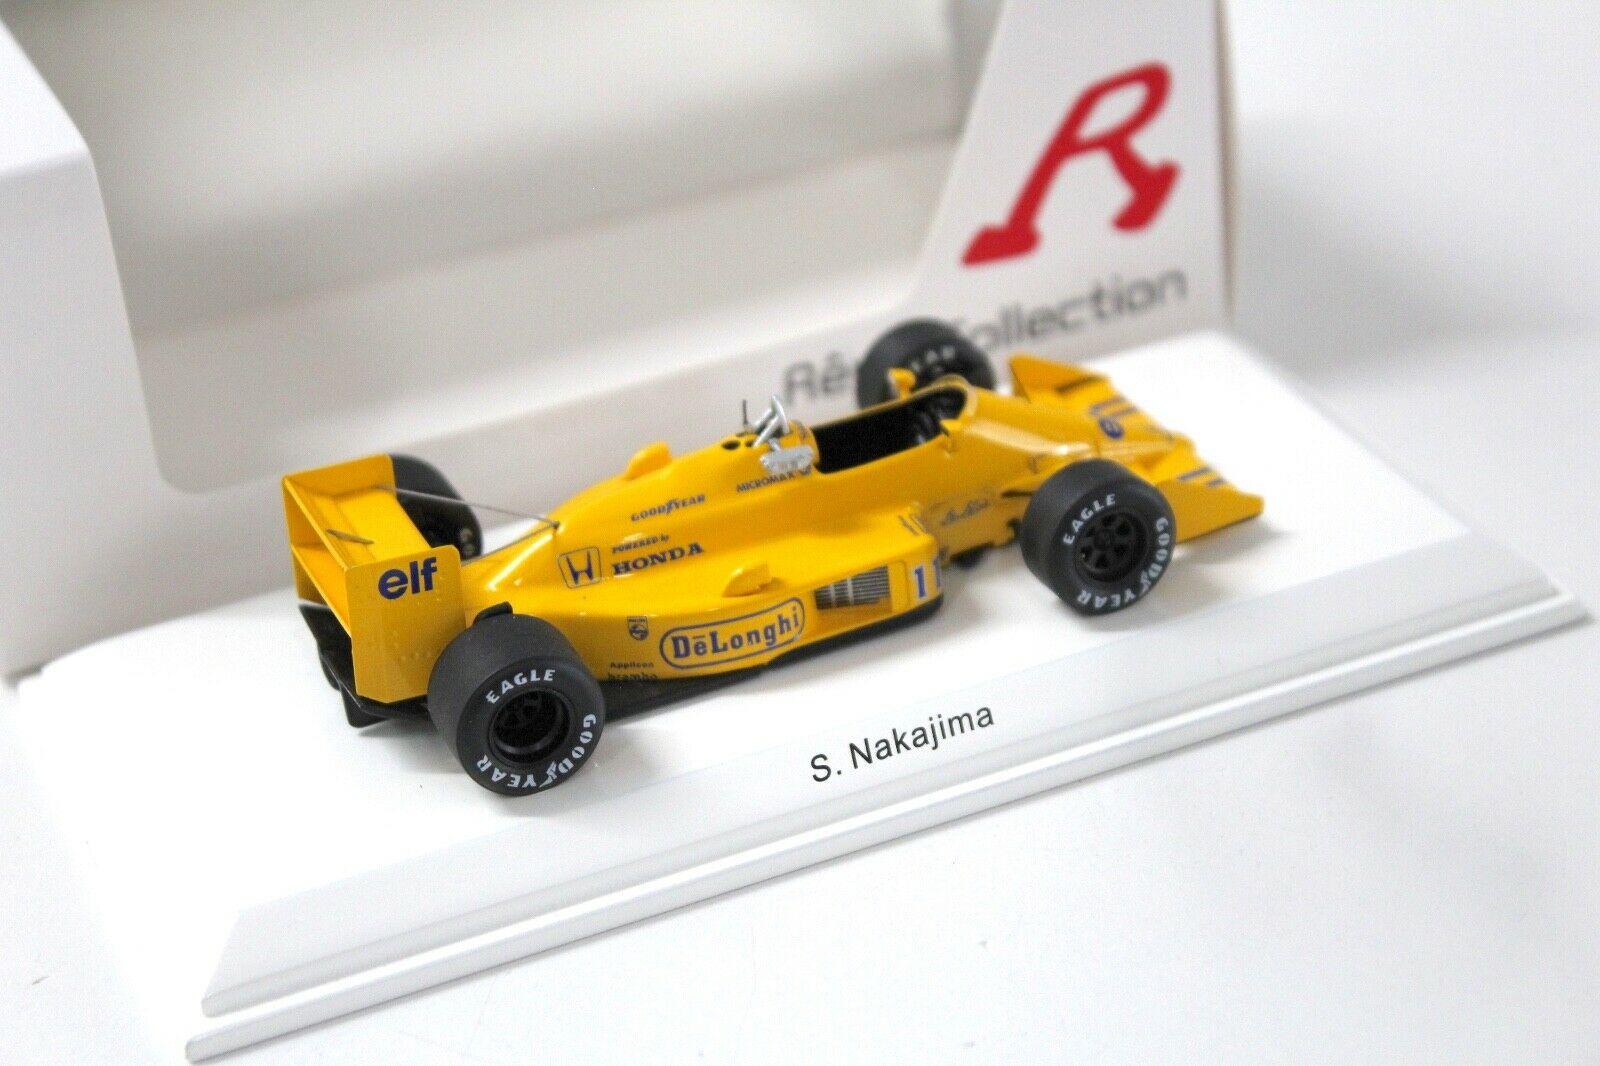 1:43 Spark Lotus 99T 1987 Japanese GP 6th #11 Nakajima